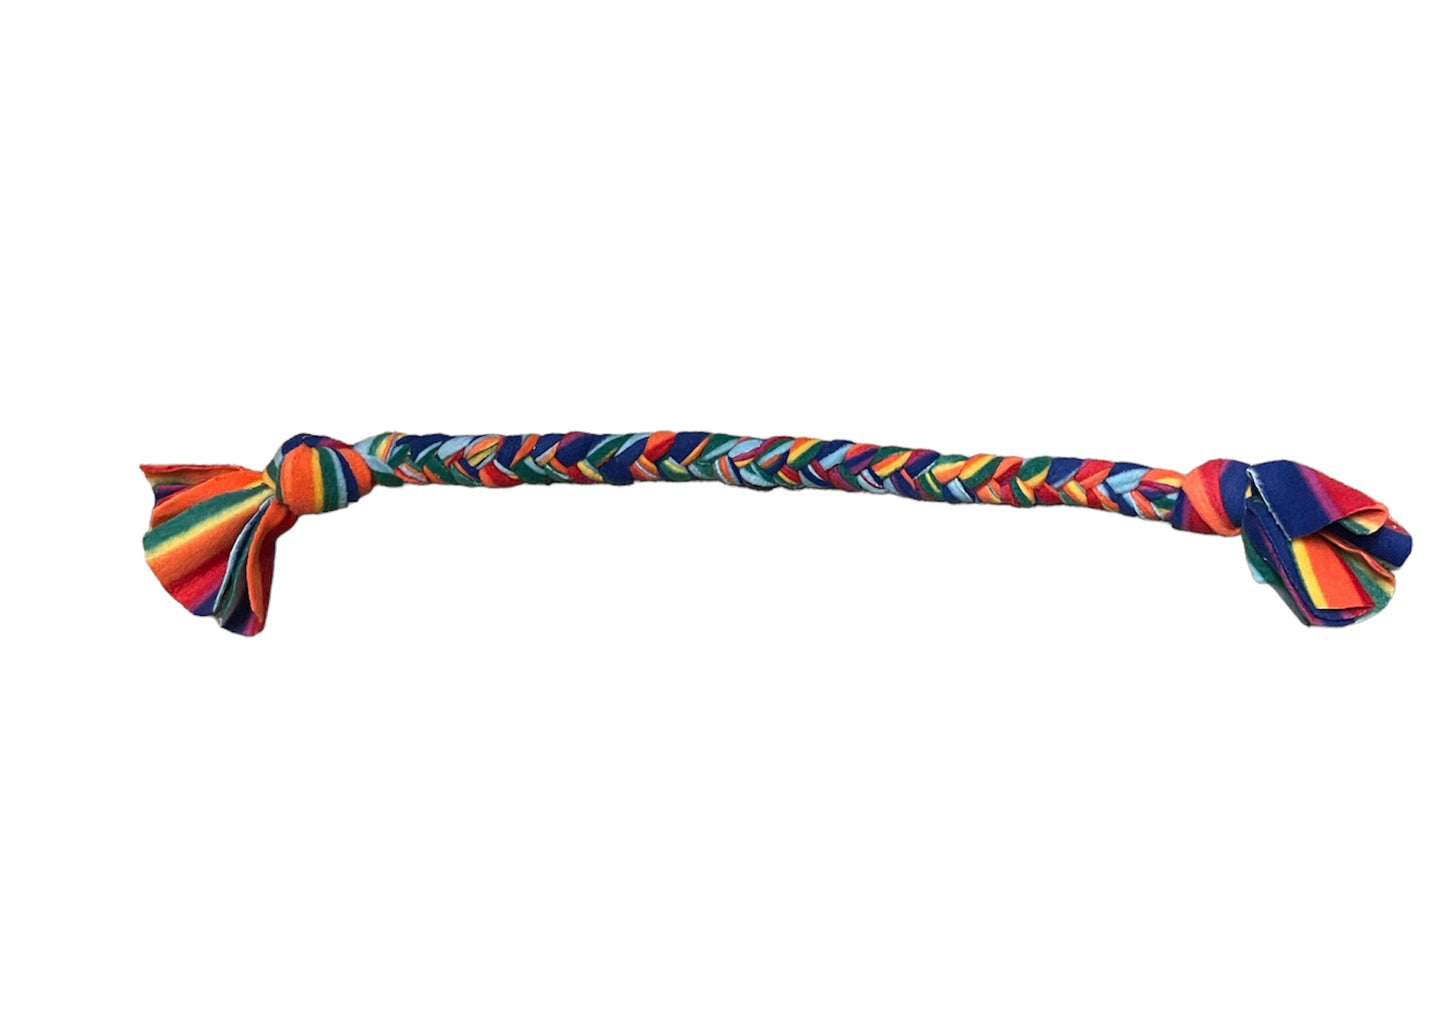 Extra long rainbow plated tug toy dog toy